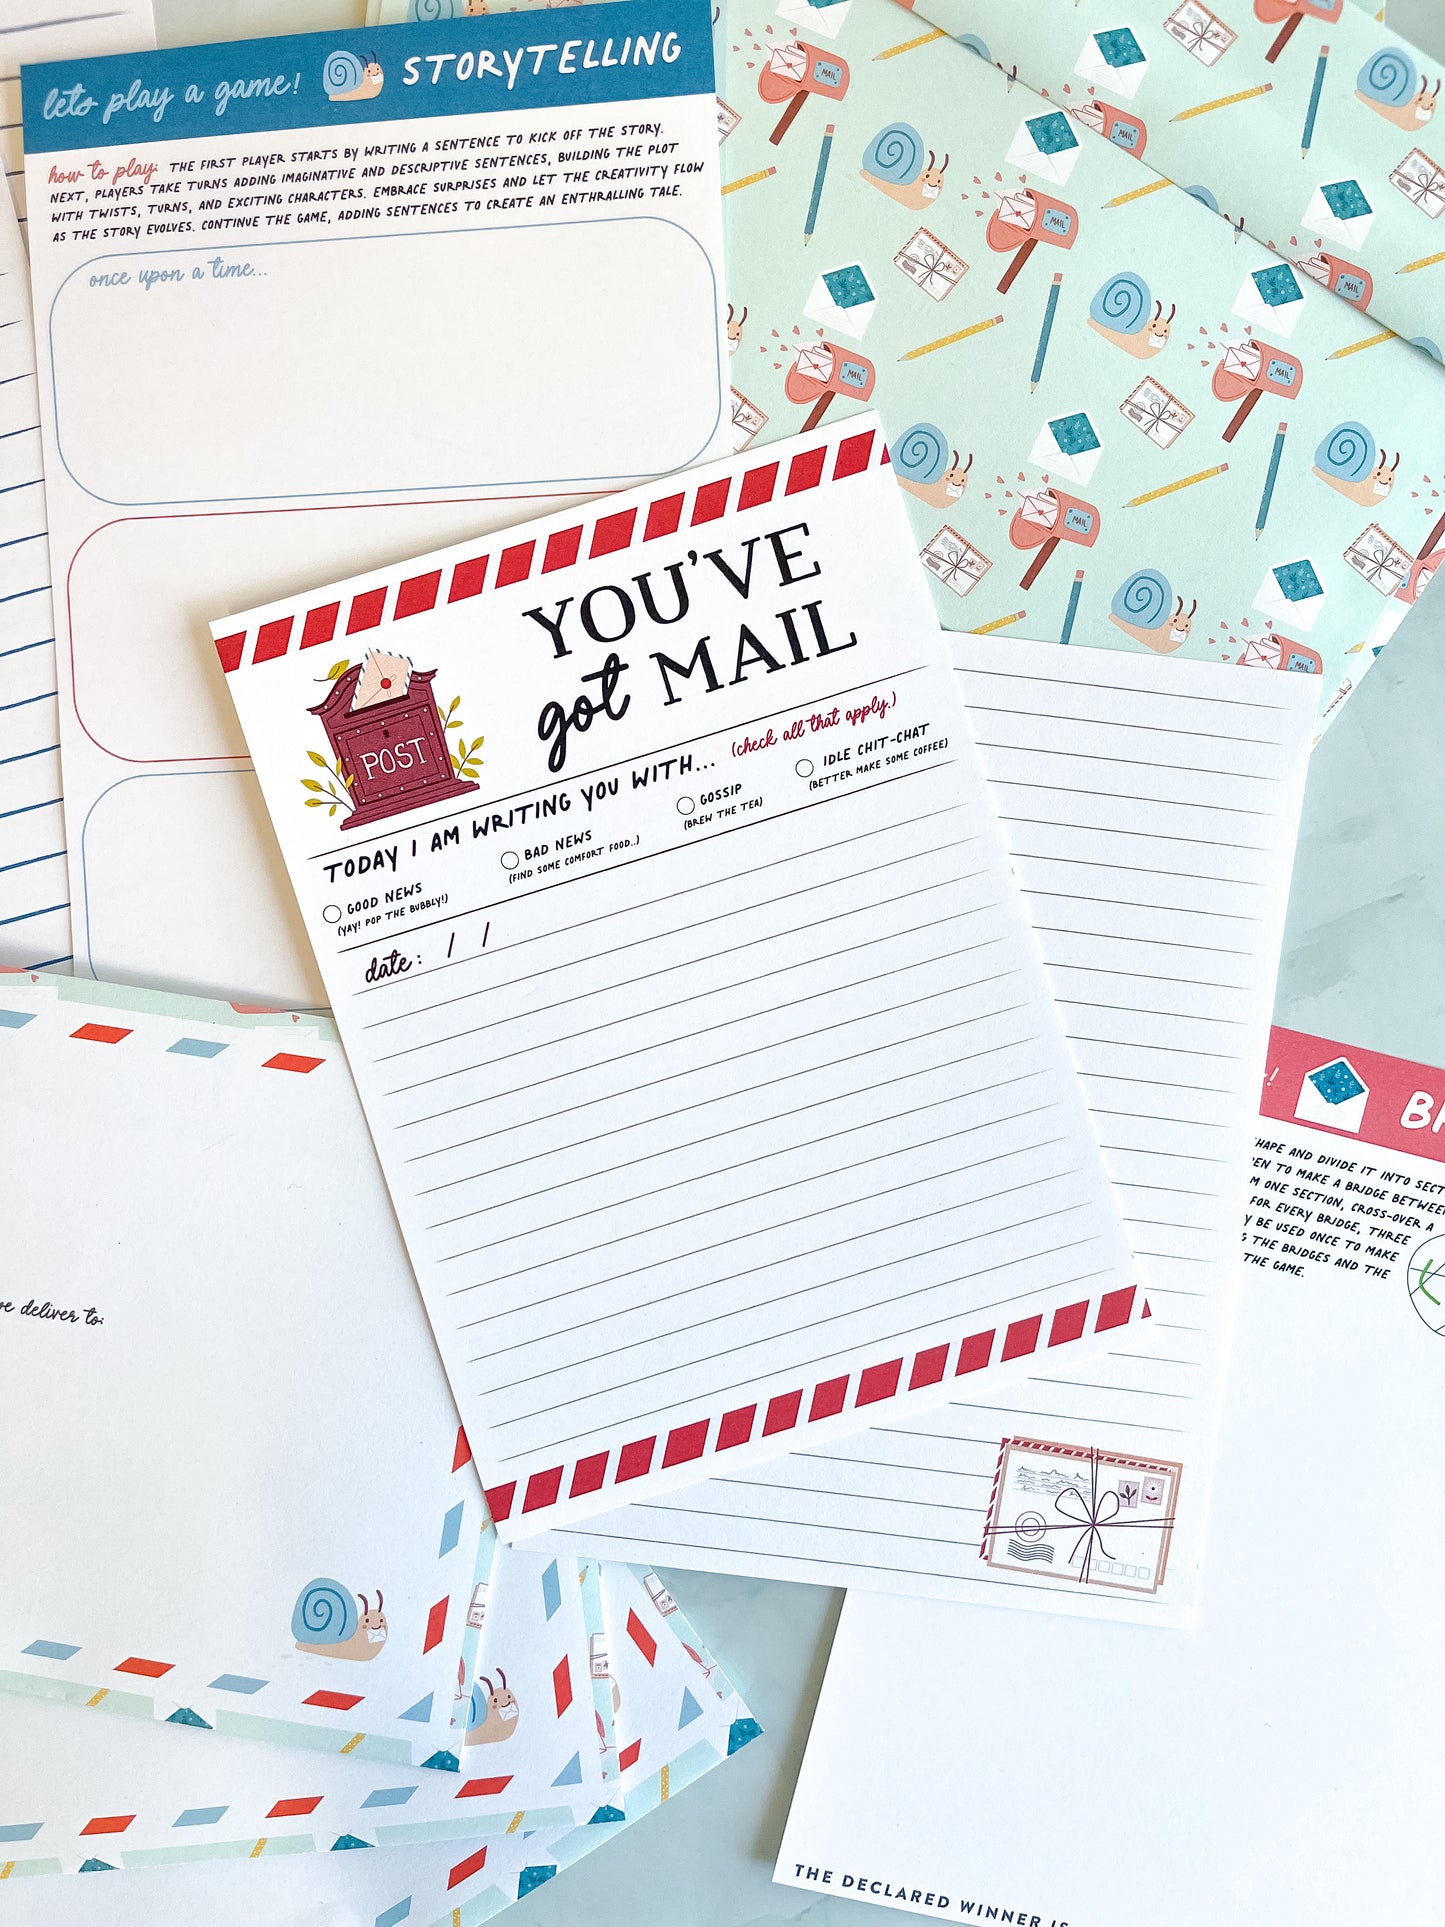 Snail Mail Kit